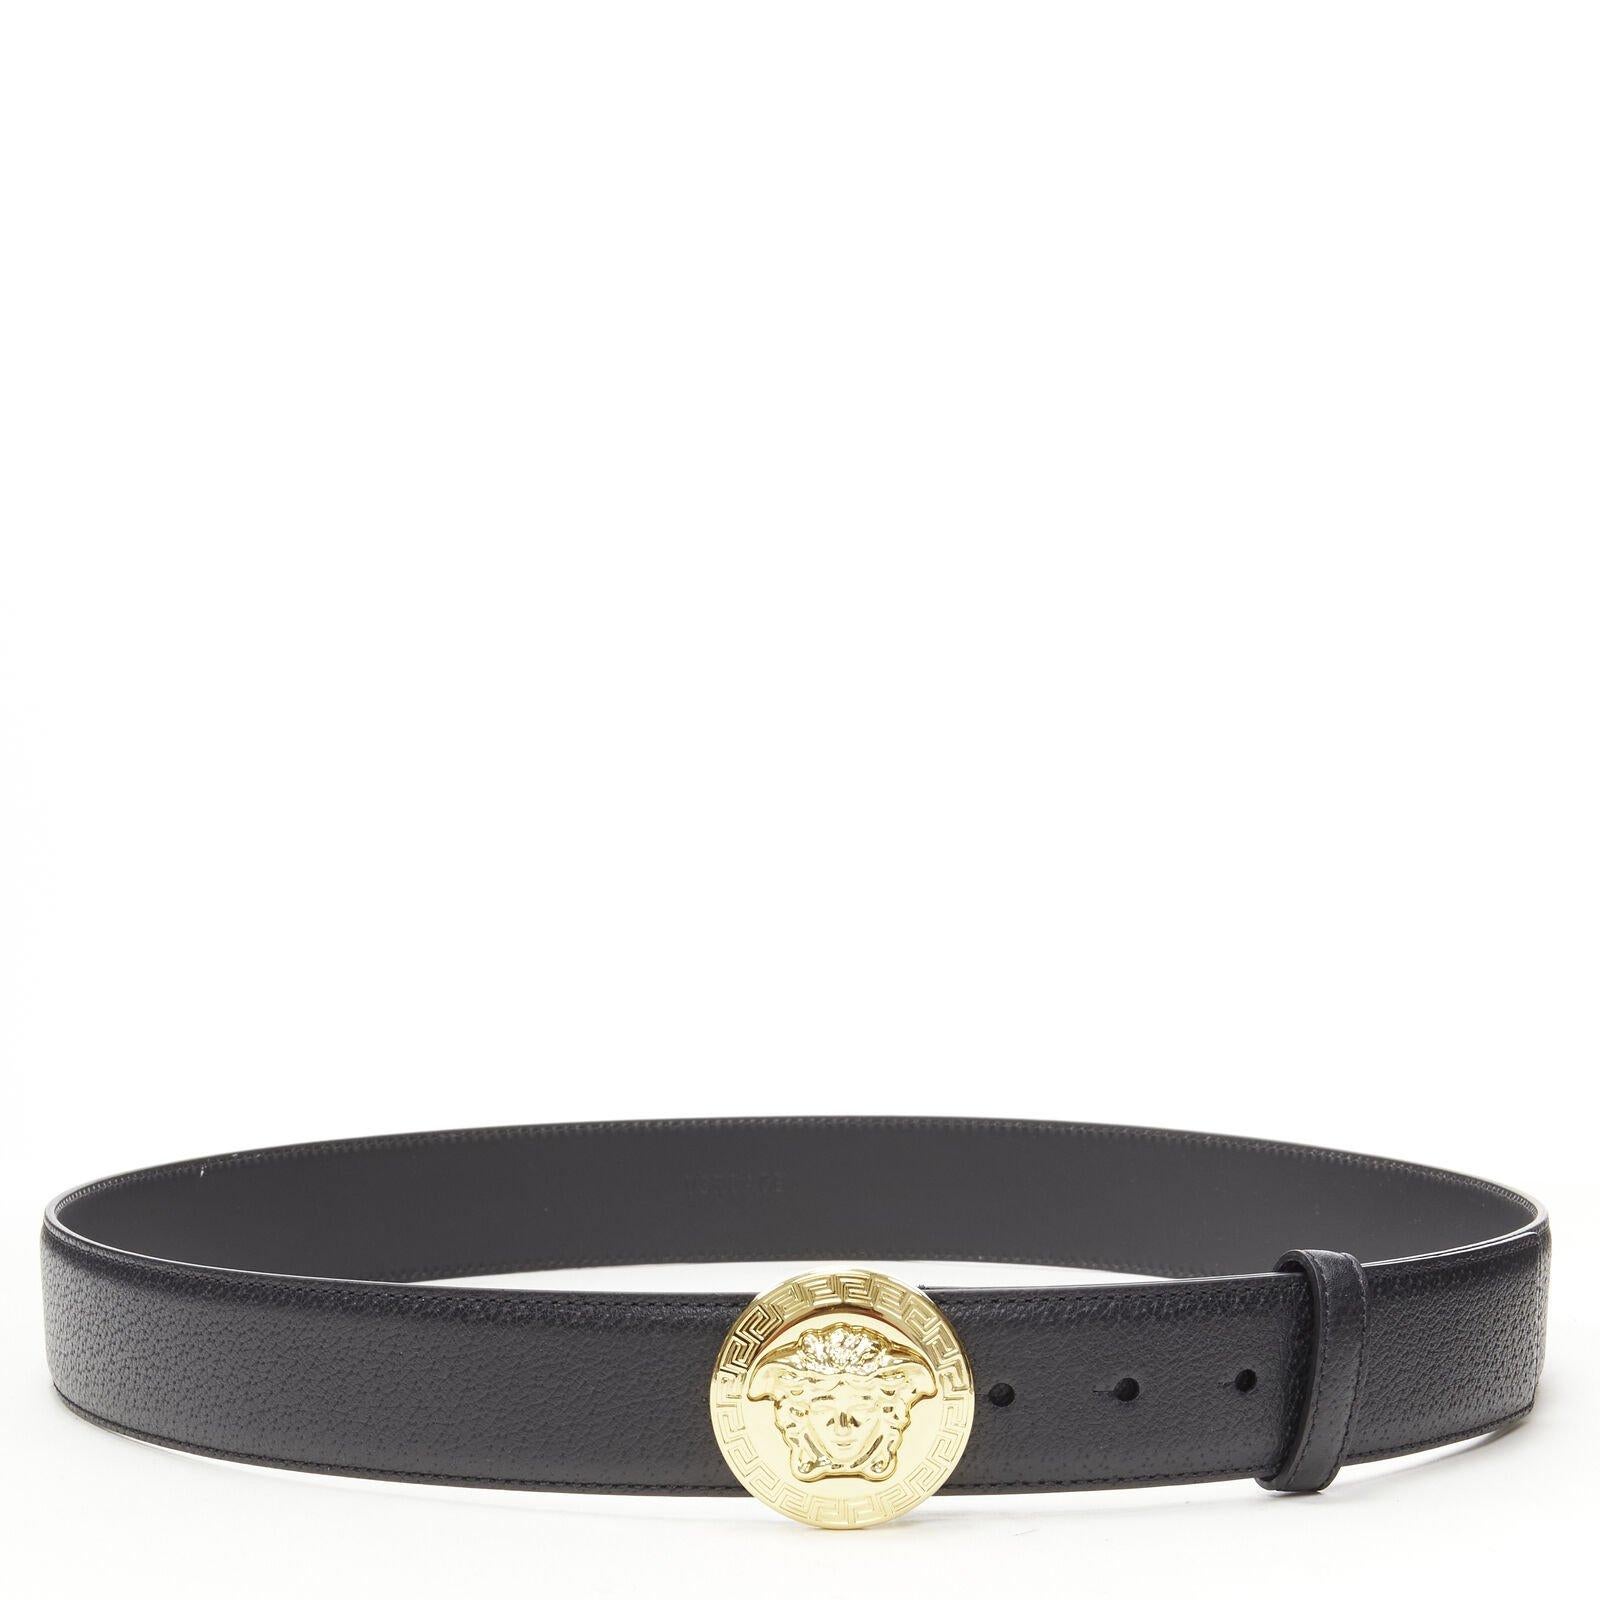 VERSACE Medusa Medallion Coin gold buckle black leather belt 115cm 44-48